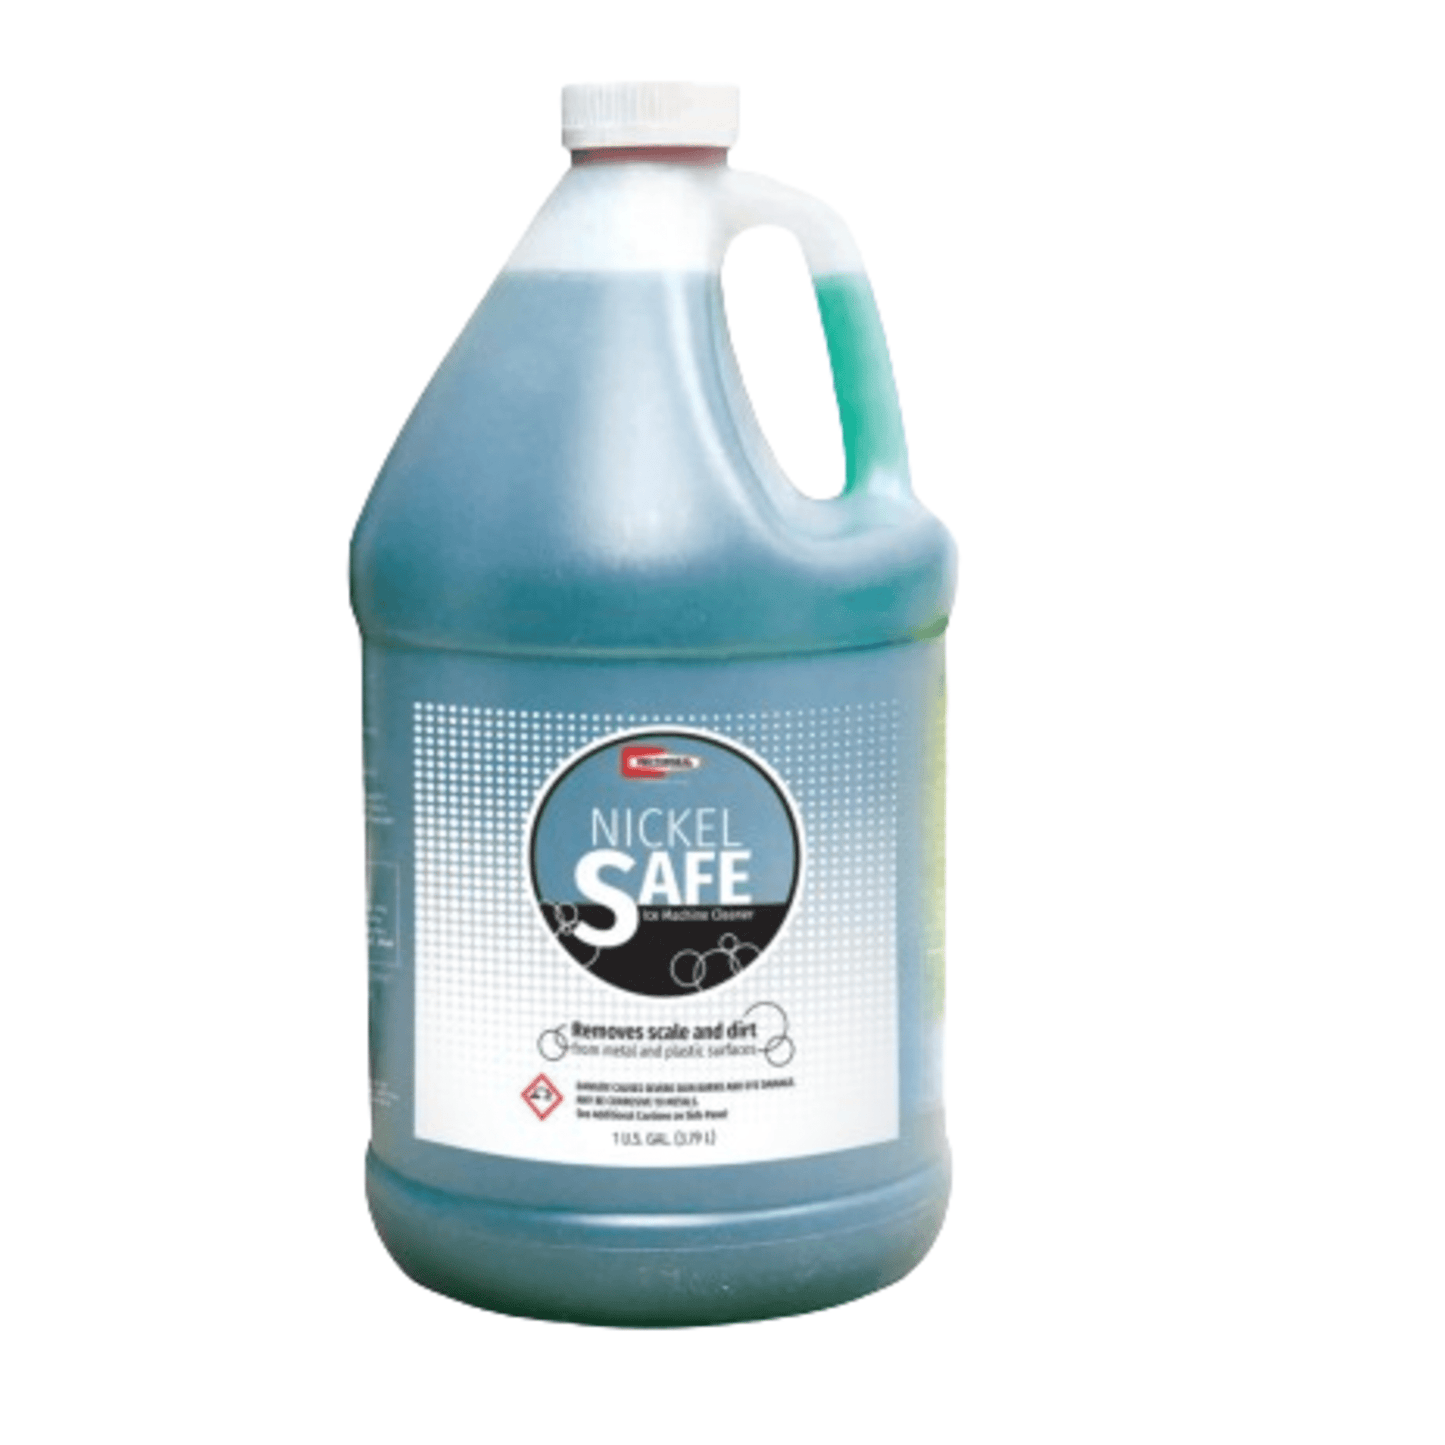 Rectorseal 88314, Nickel Safe Ice Machine Cleaner, Gallon - 4PK